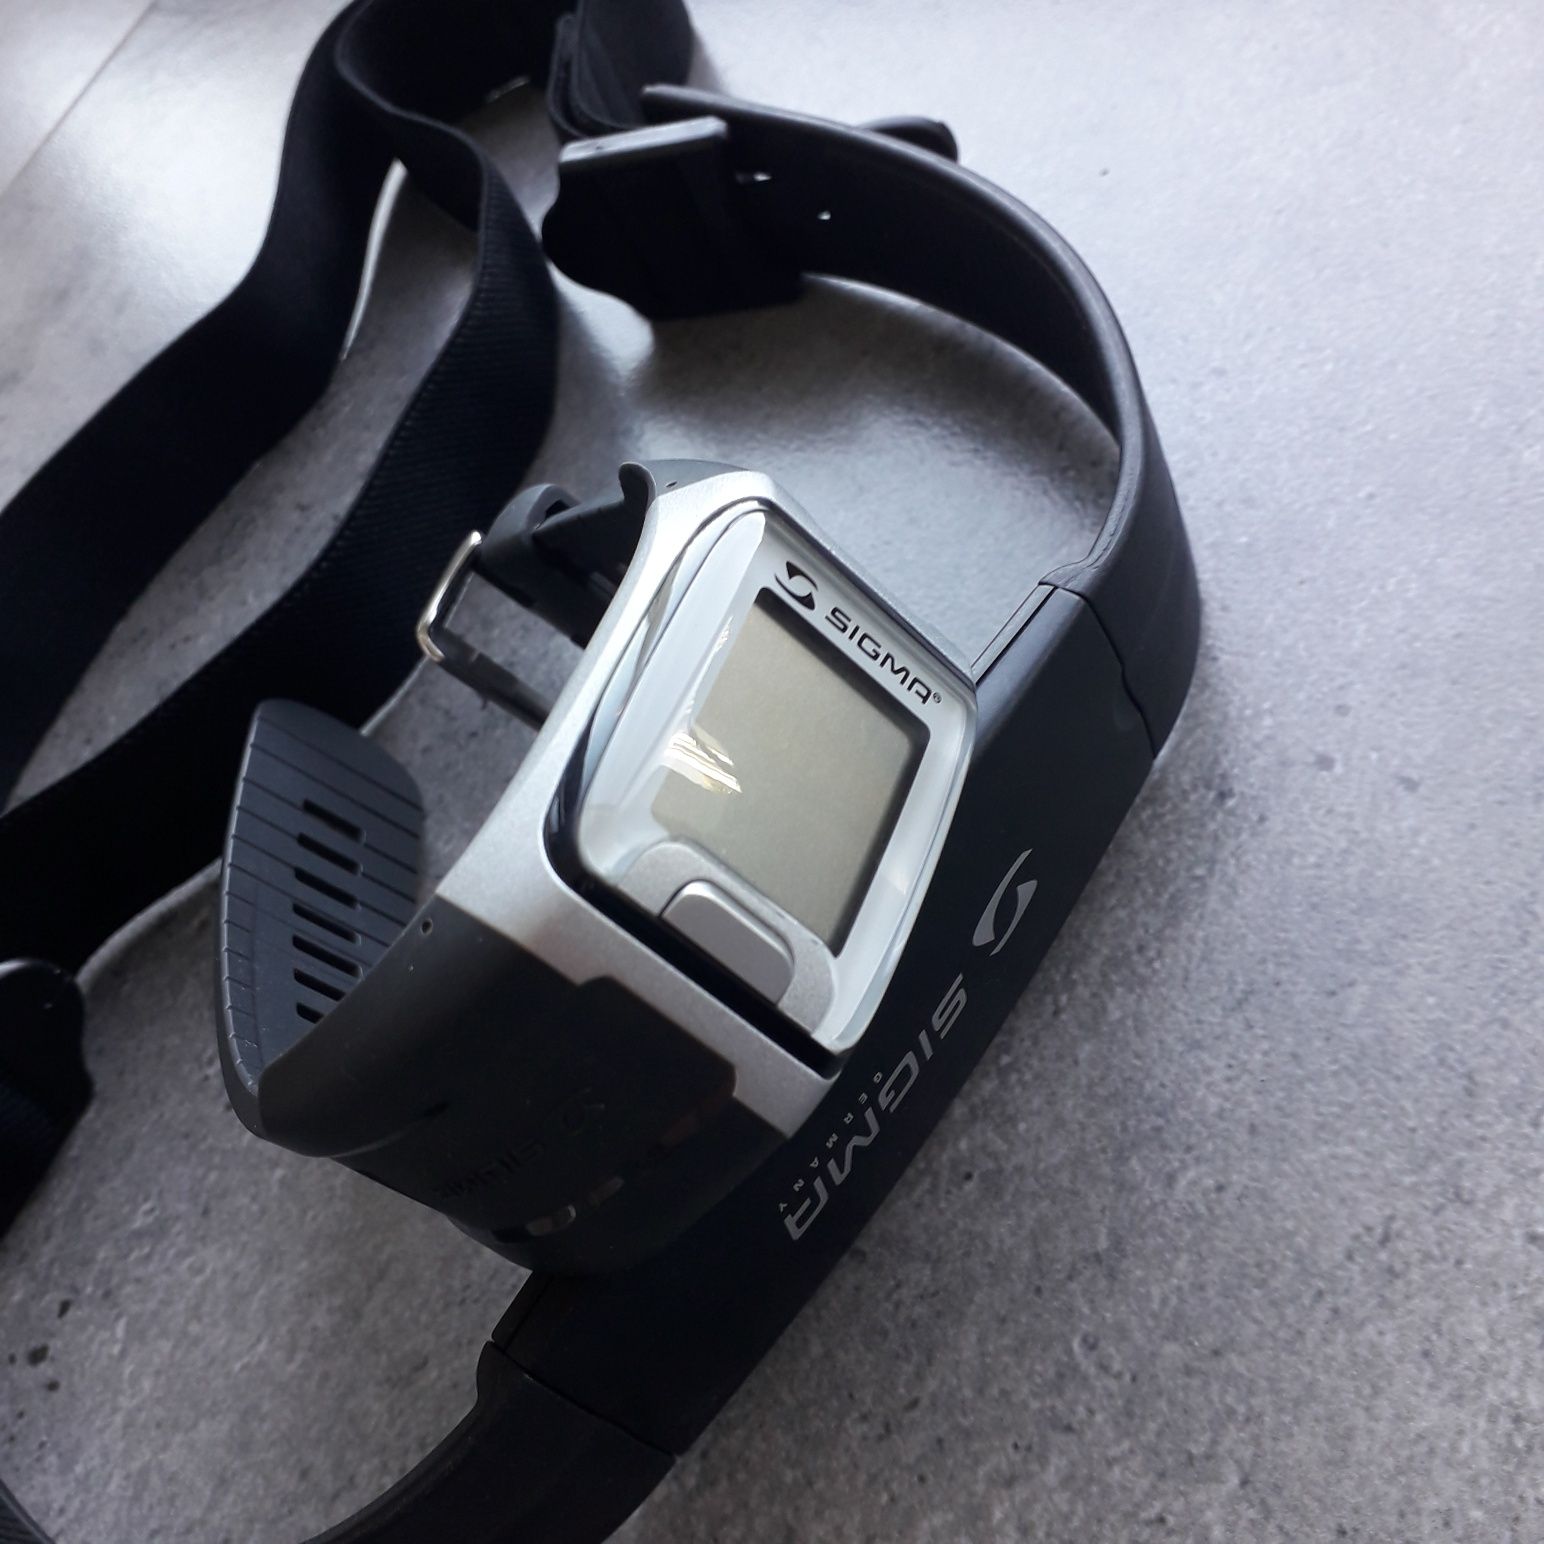 Pulsometr SIGMA PC 3.11 tętno Plus zegarek stoper do biegania opaska